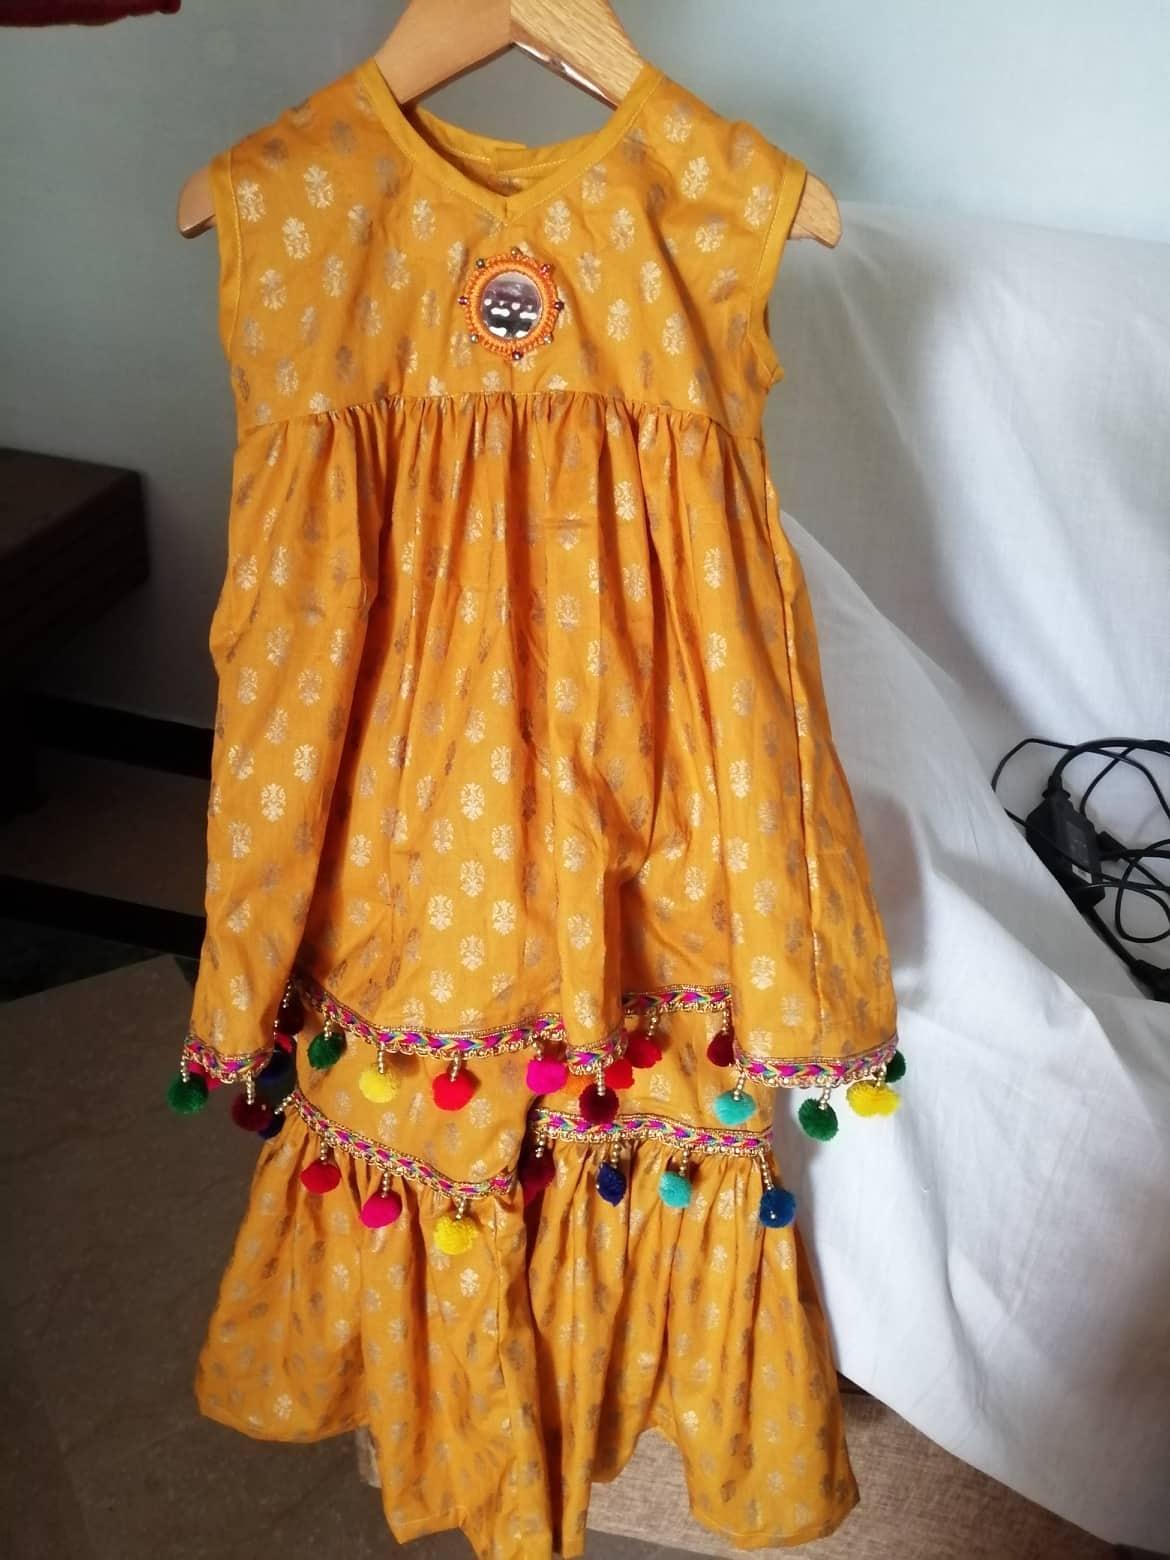 sharara dress for girl